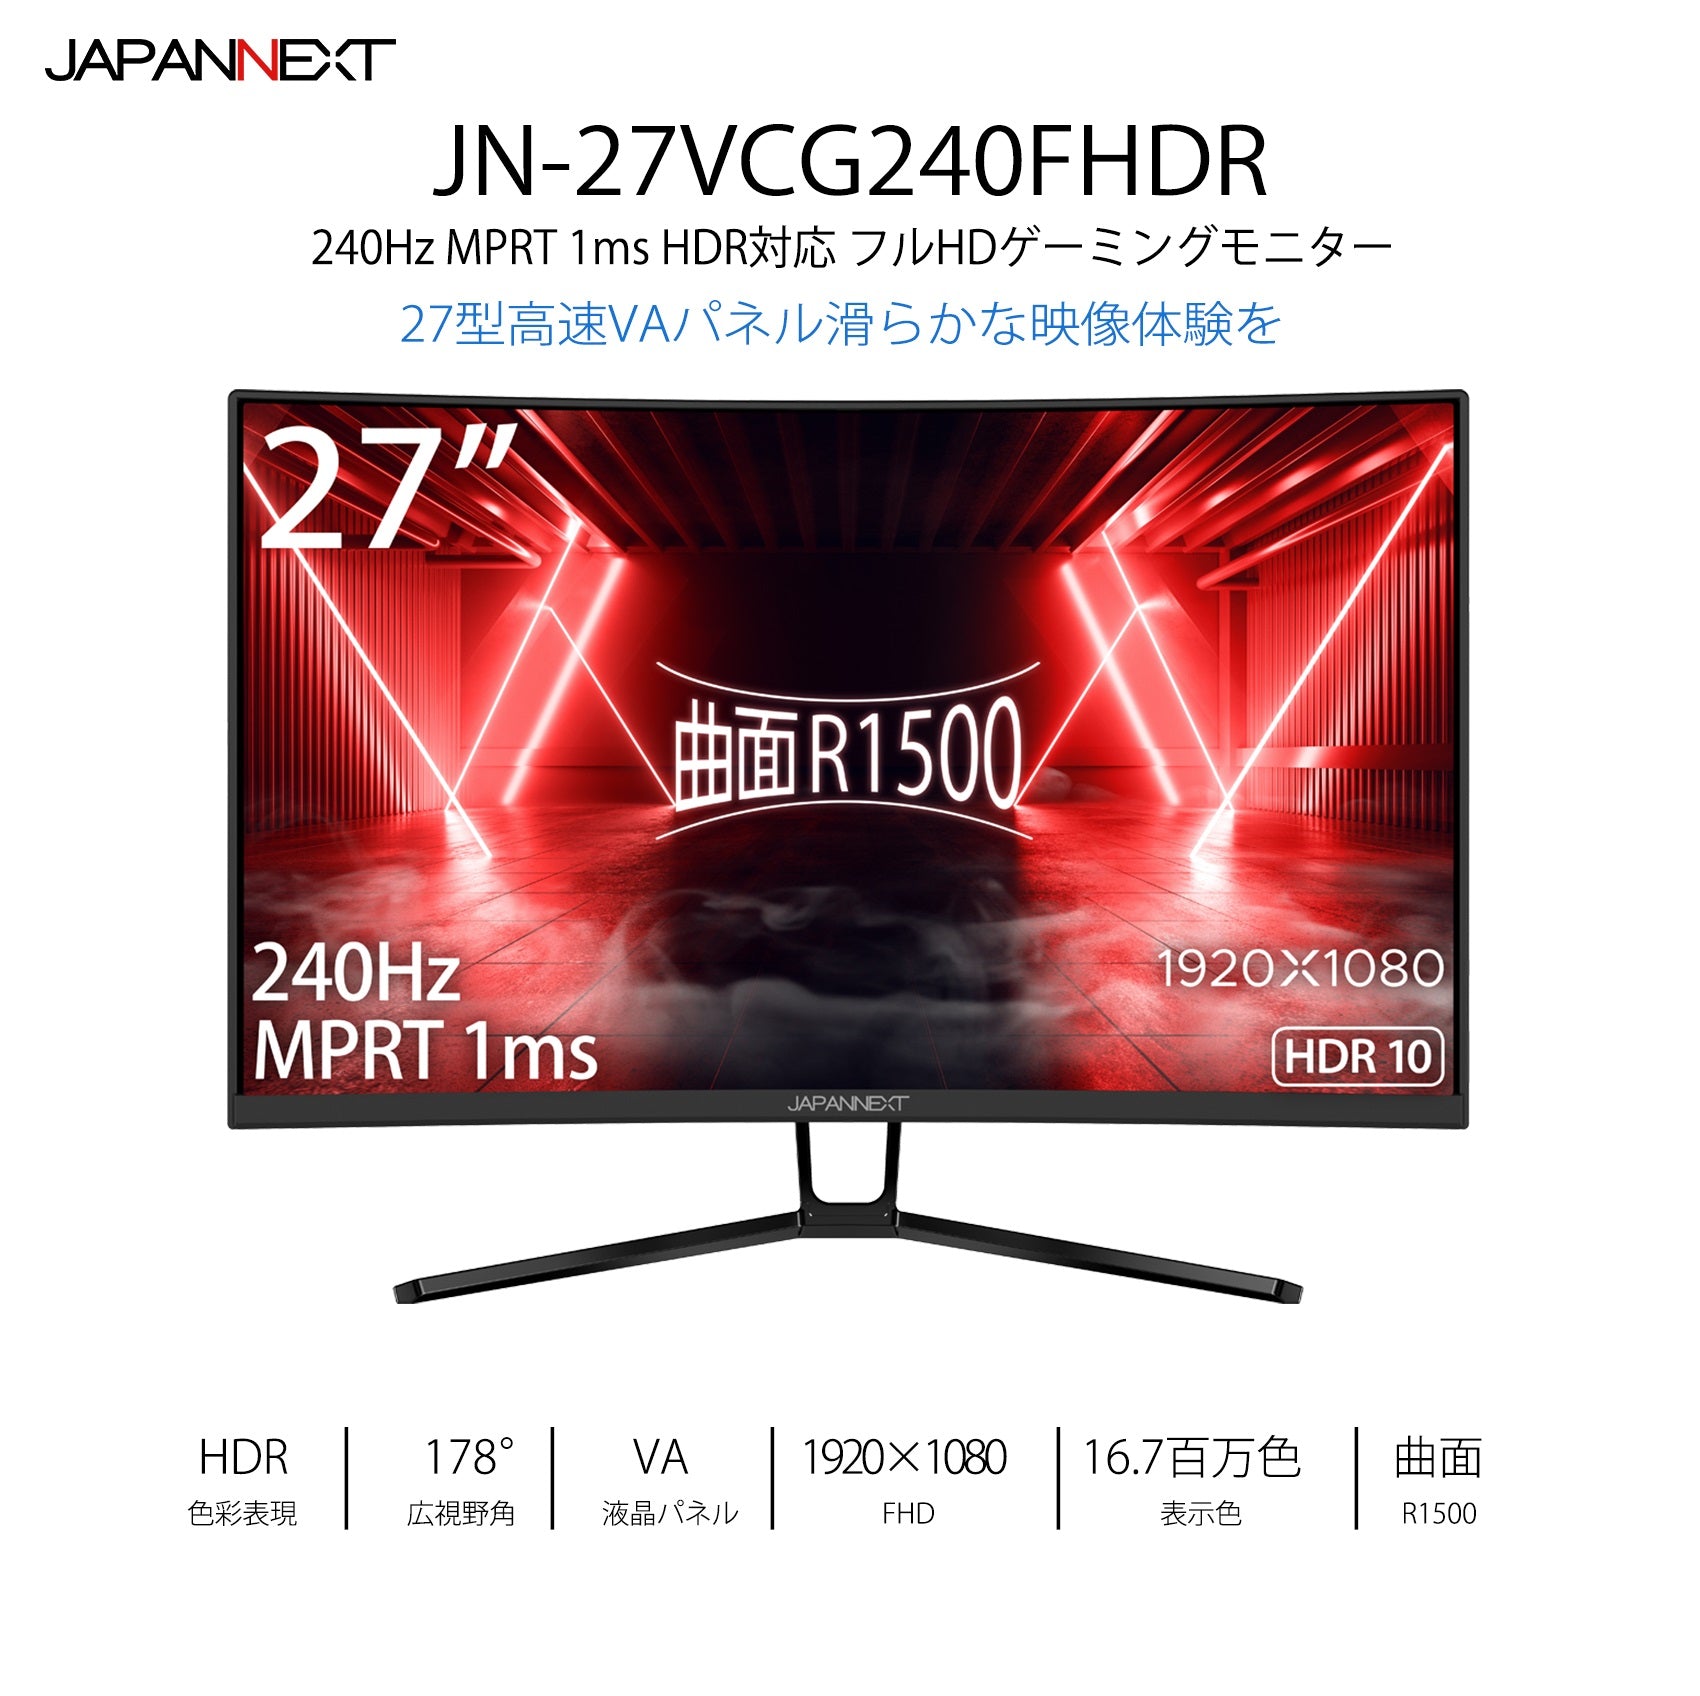 JAPANNEXT 27インチ 曲面 Full HD(1920 x 1080) 240Hz 液晶モニター JN